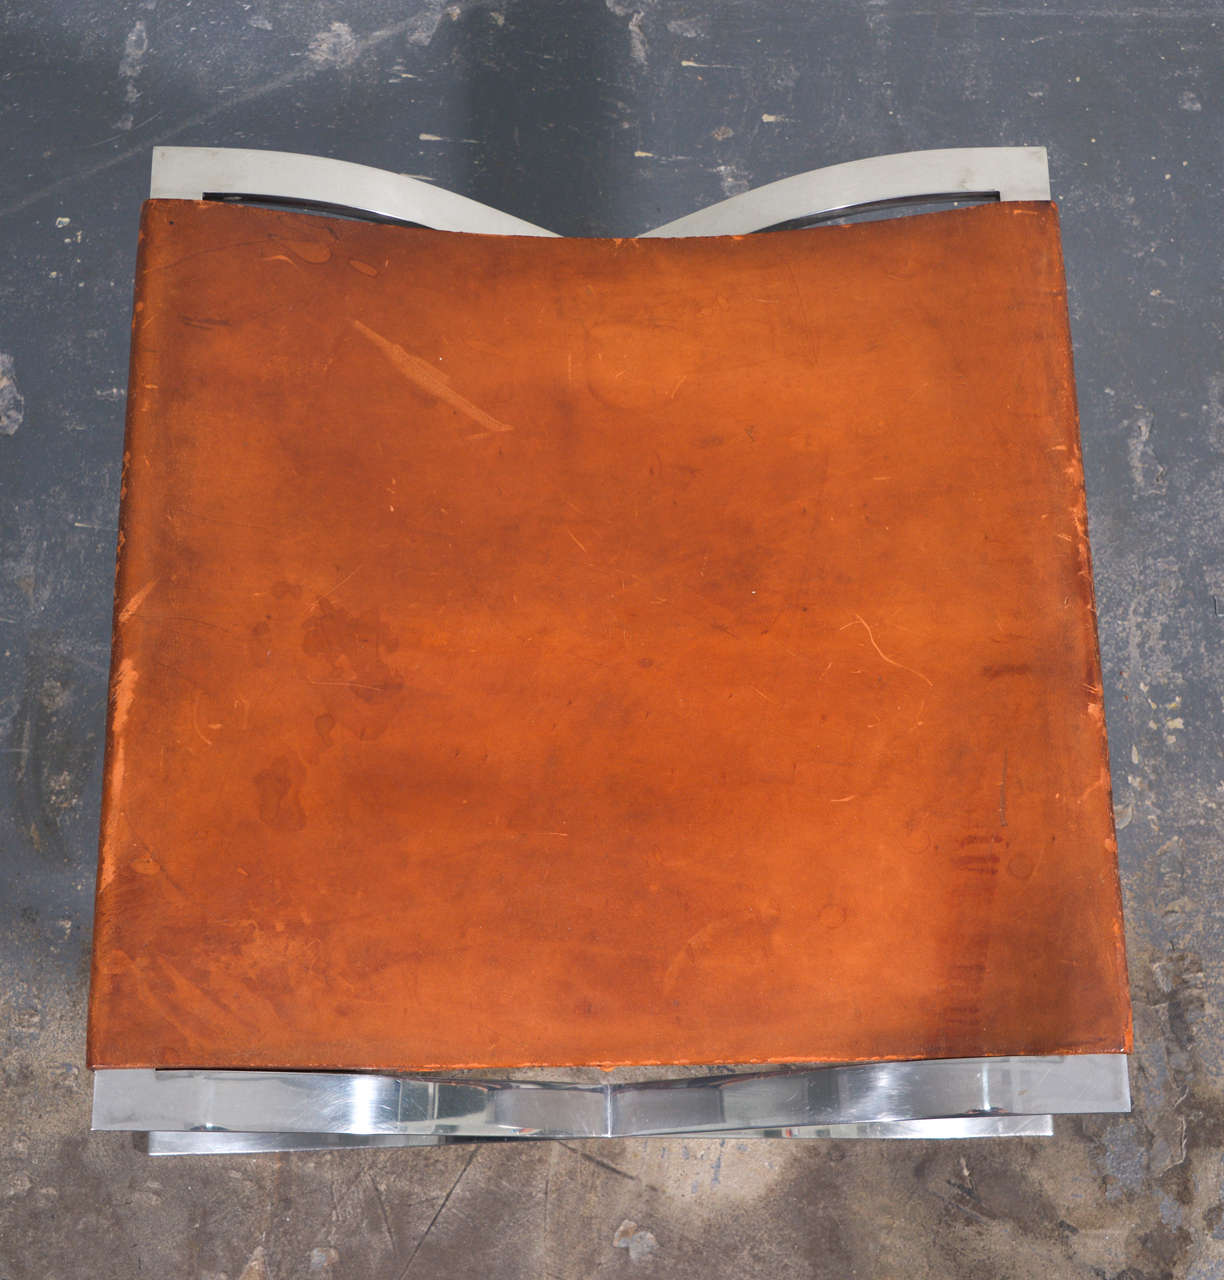 American Ludwig Mies van der Rohe Barcelona Stool in Original Leather, 1965